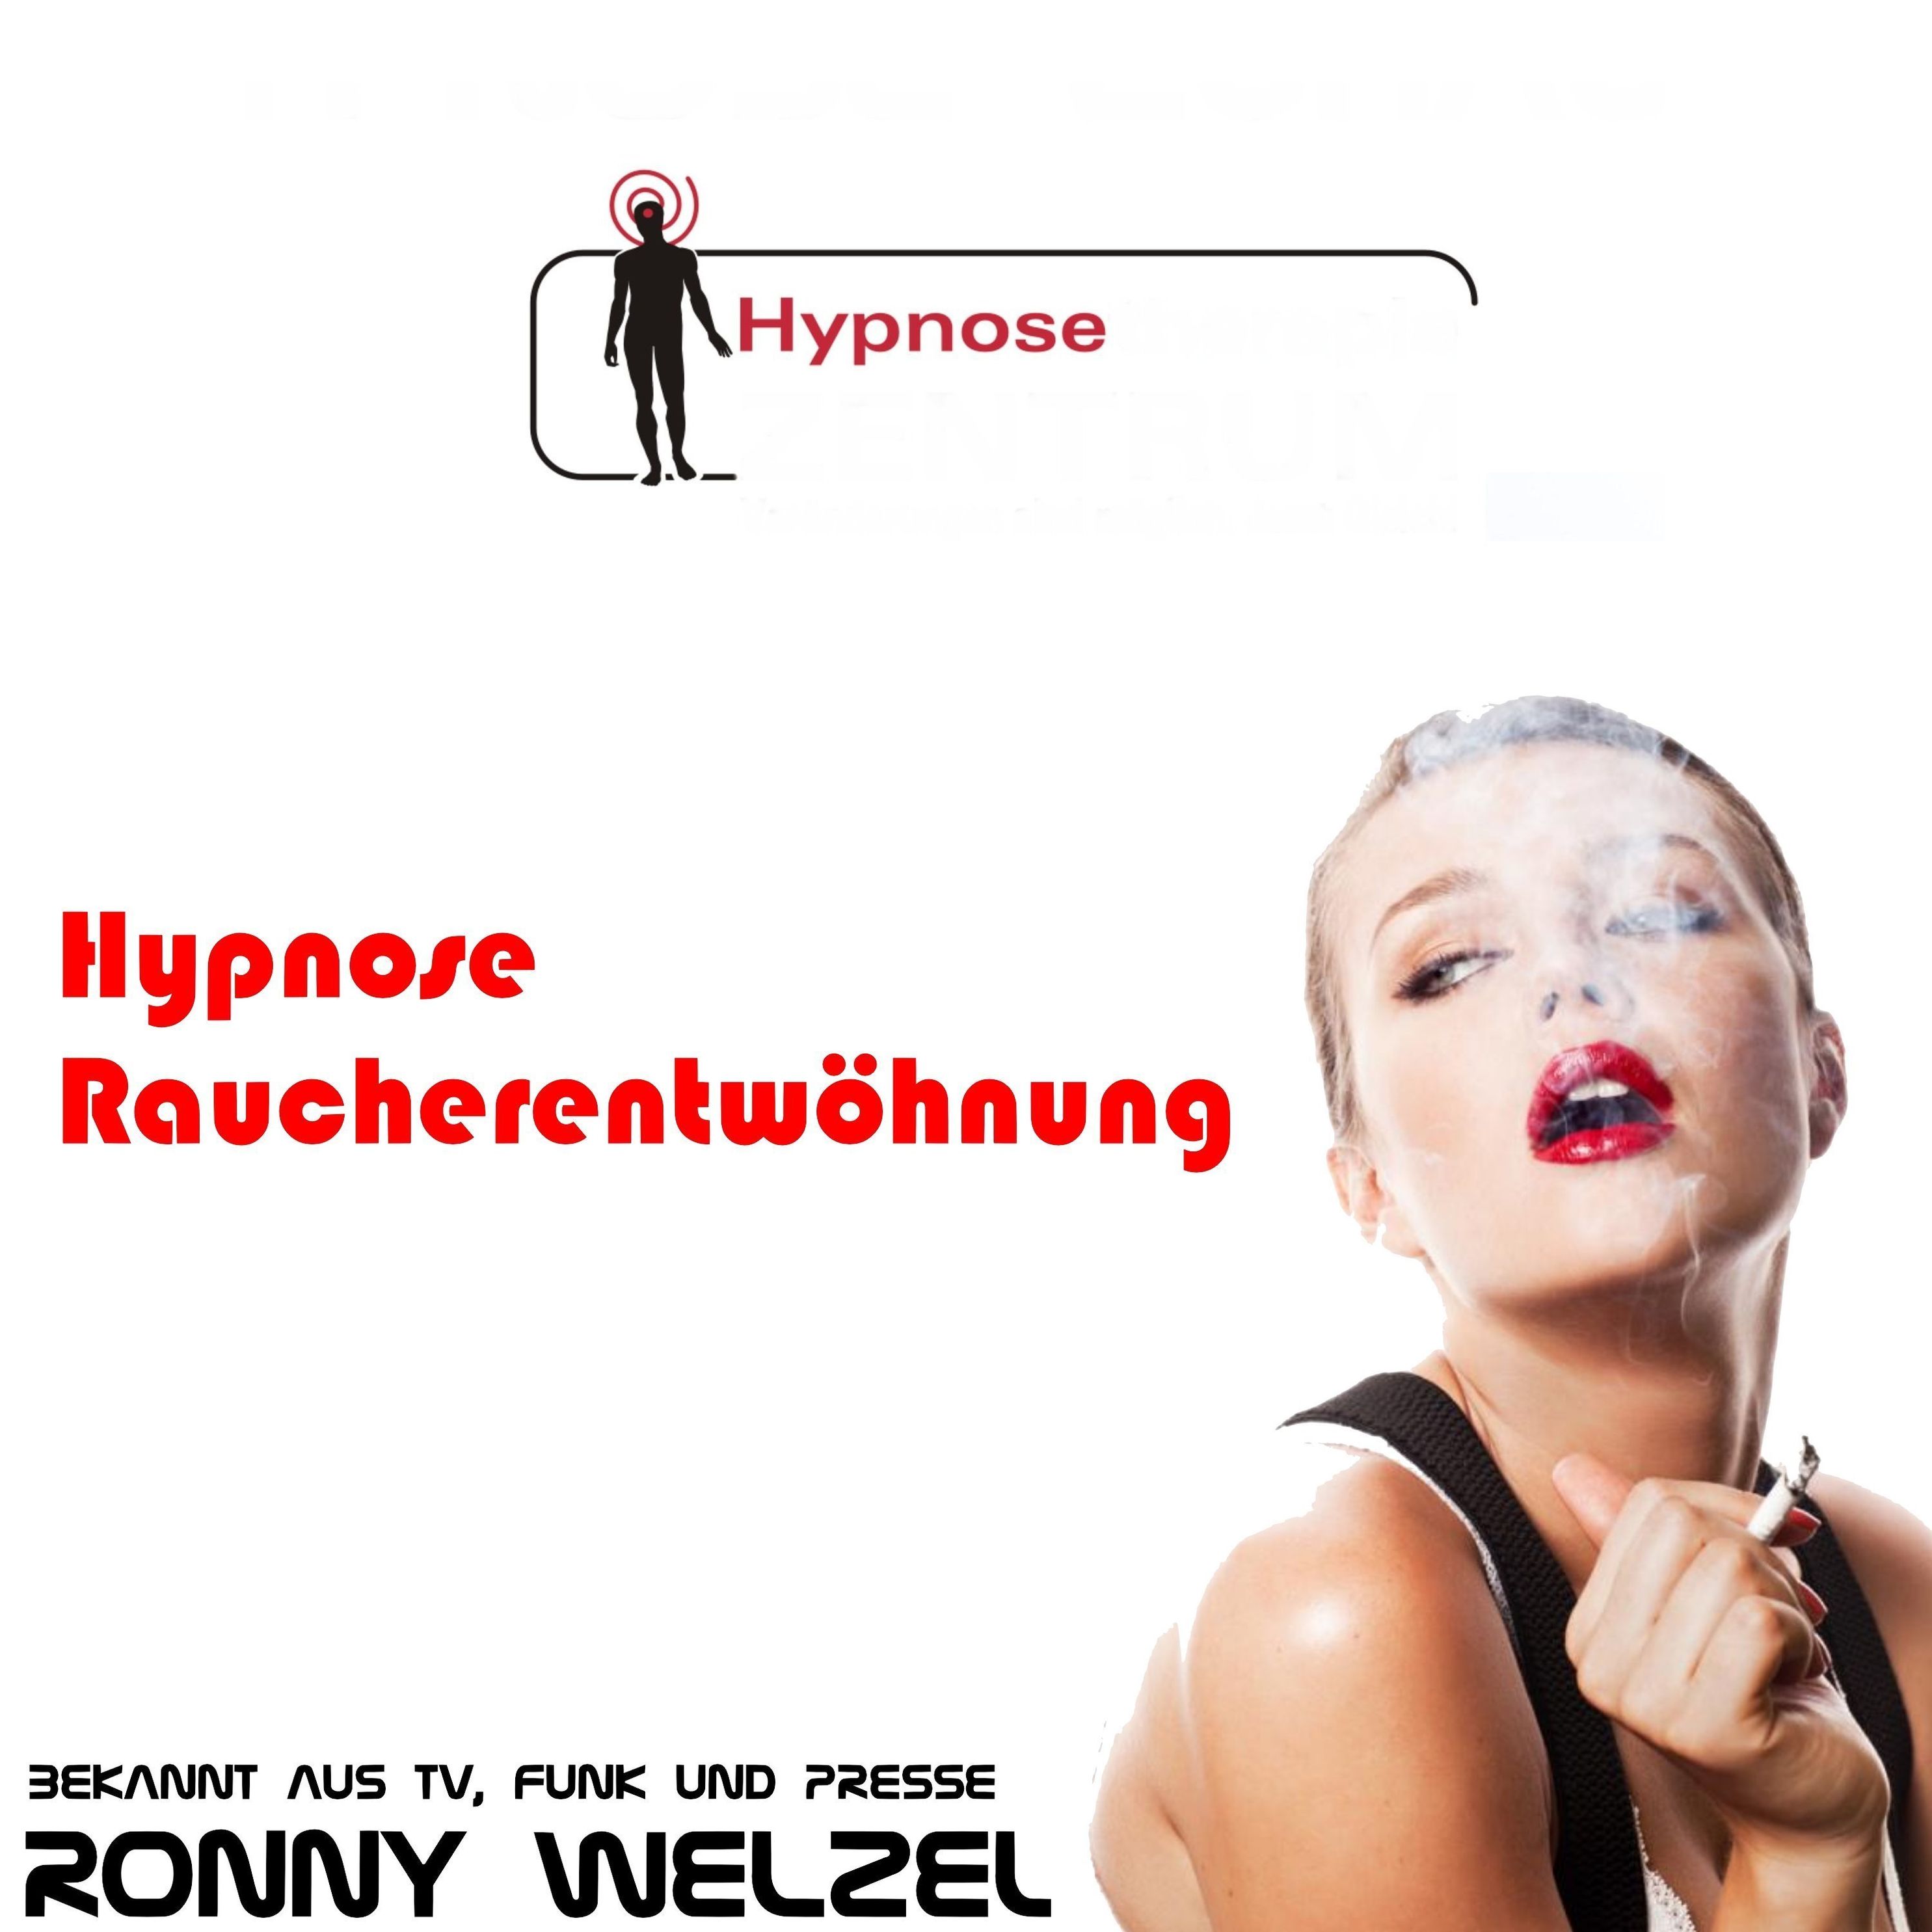 Hypnose CD - Hypnose Raucherentwöhnung Hörbuch Download